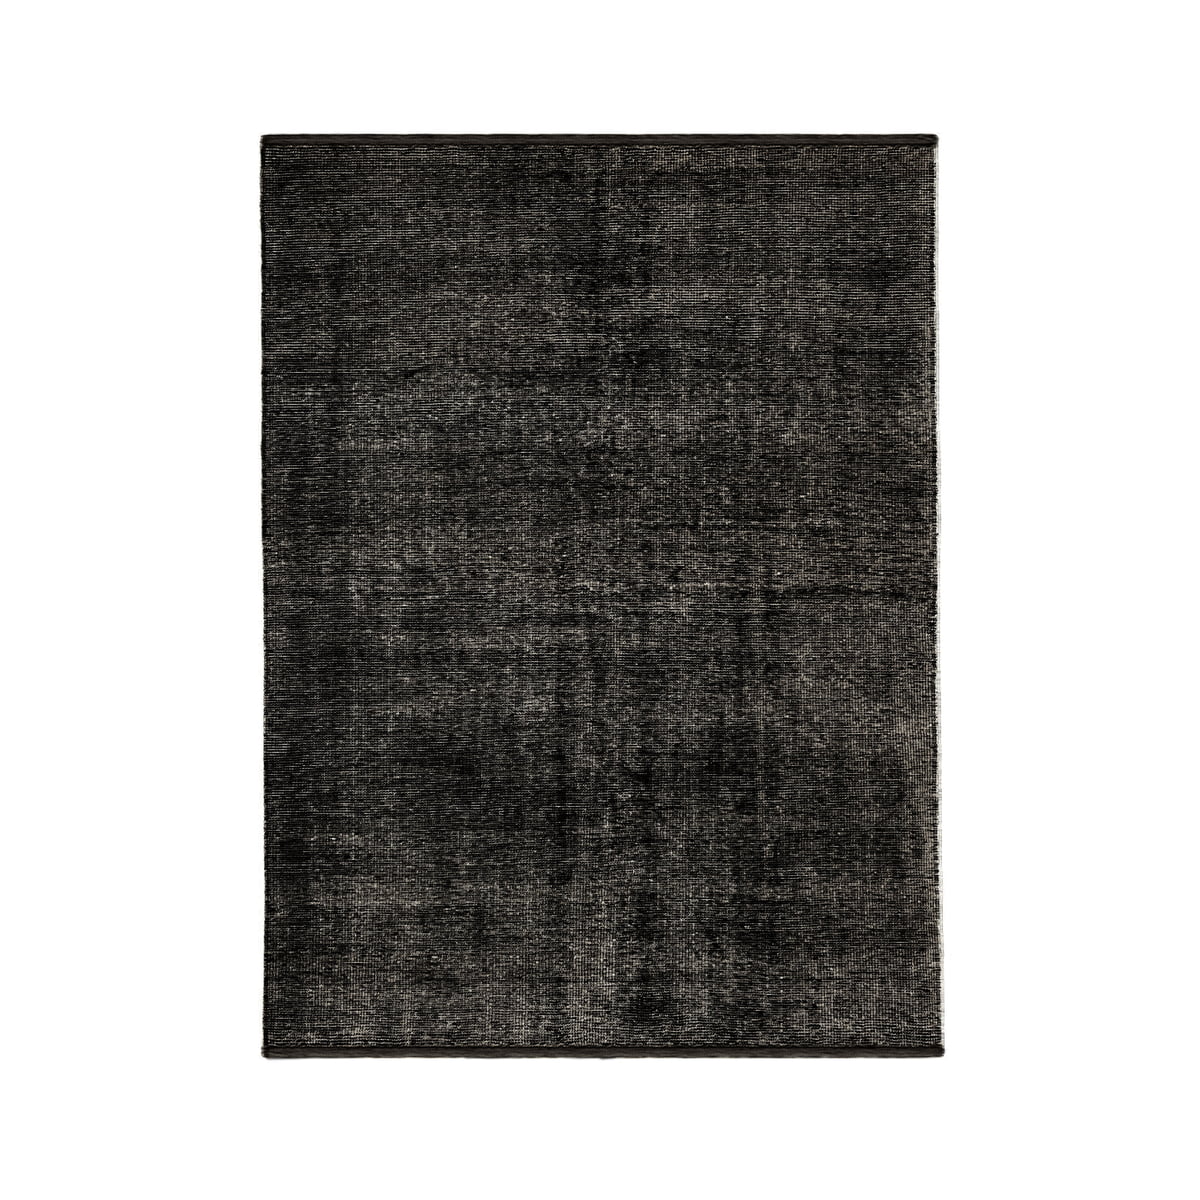 Boaman Abstract Gray Area Rug Williston Forge Rug Size: Rectangle 5' x 8